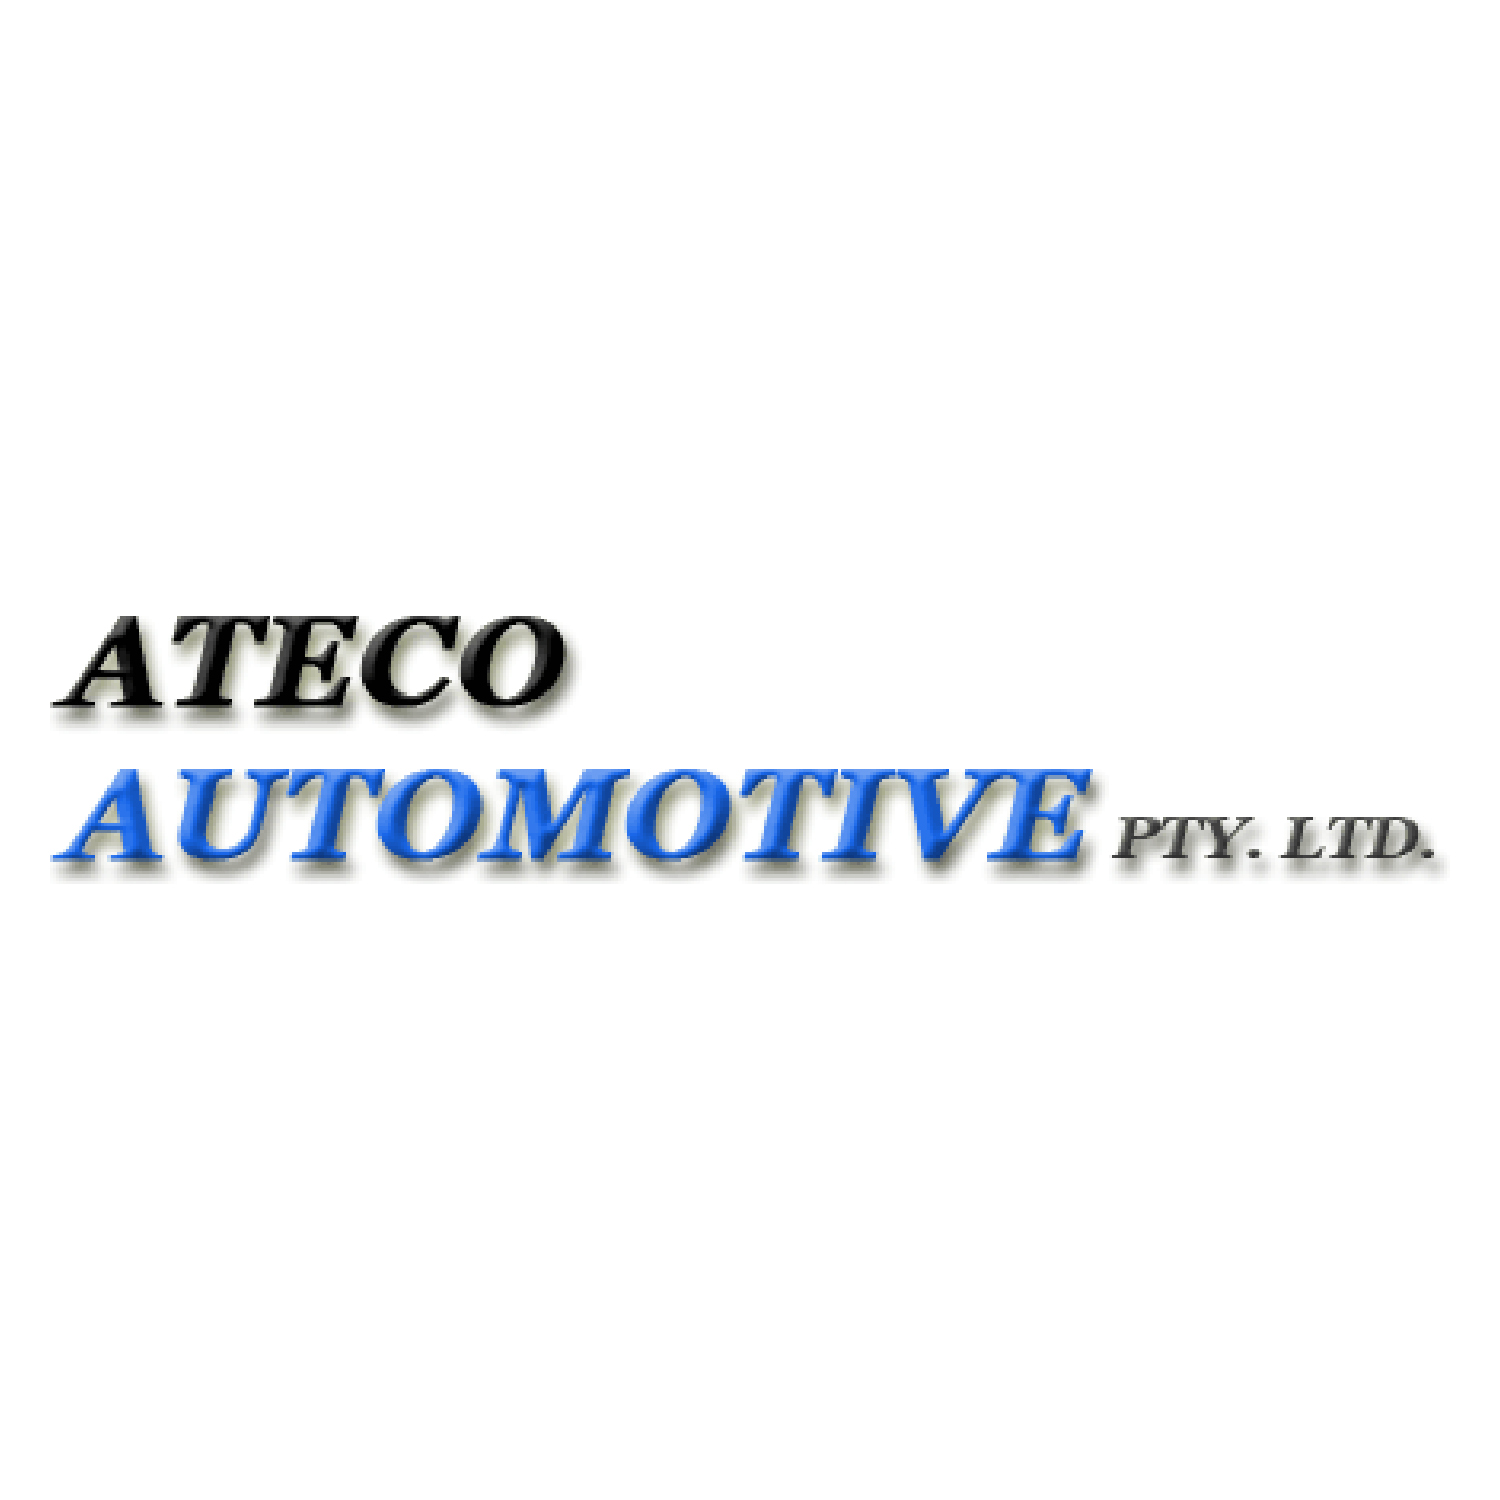 Ateco Logo.jpg